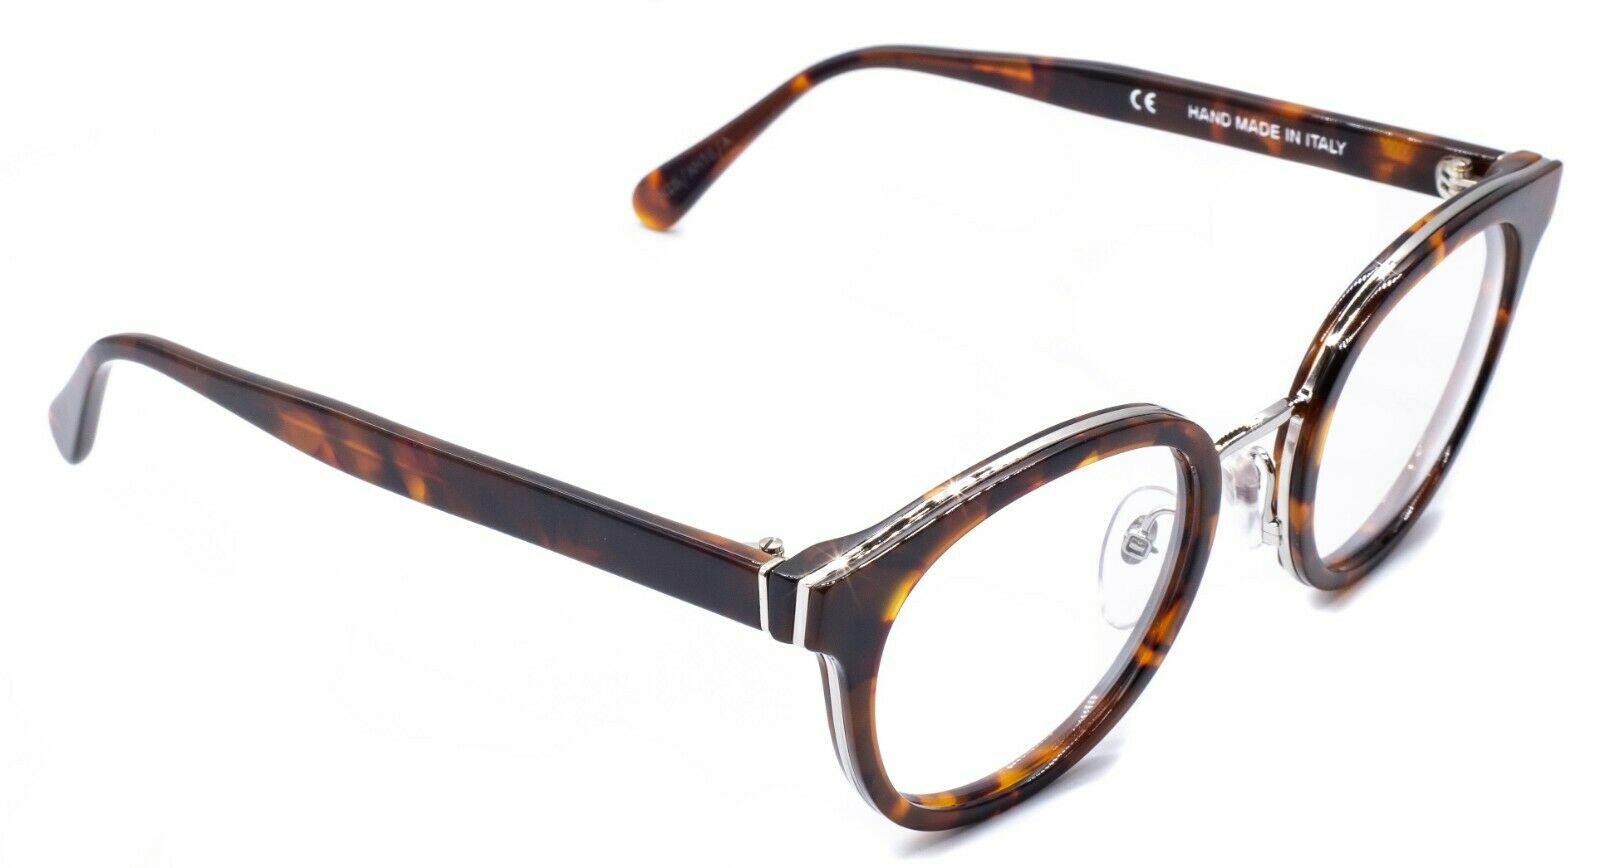 RETROSUPERFUTURE Numero 22 CLASSIC HAVANA N28 52mm Eyewear Glasses RX Optical